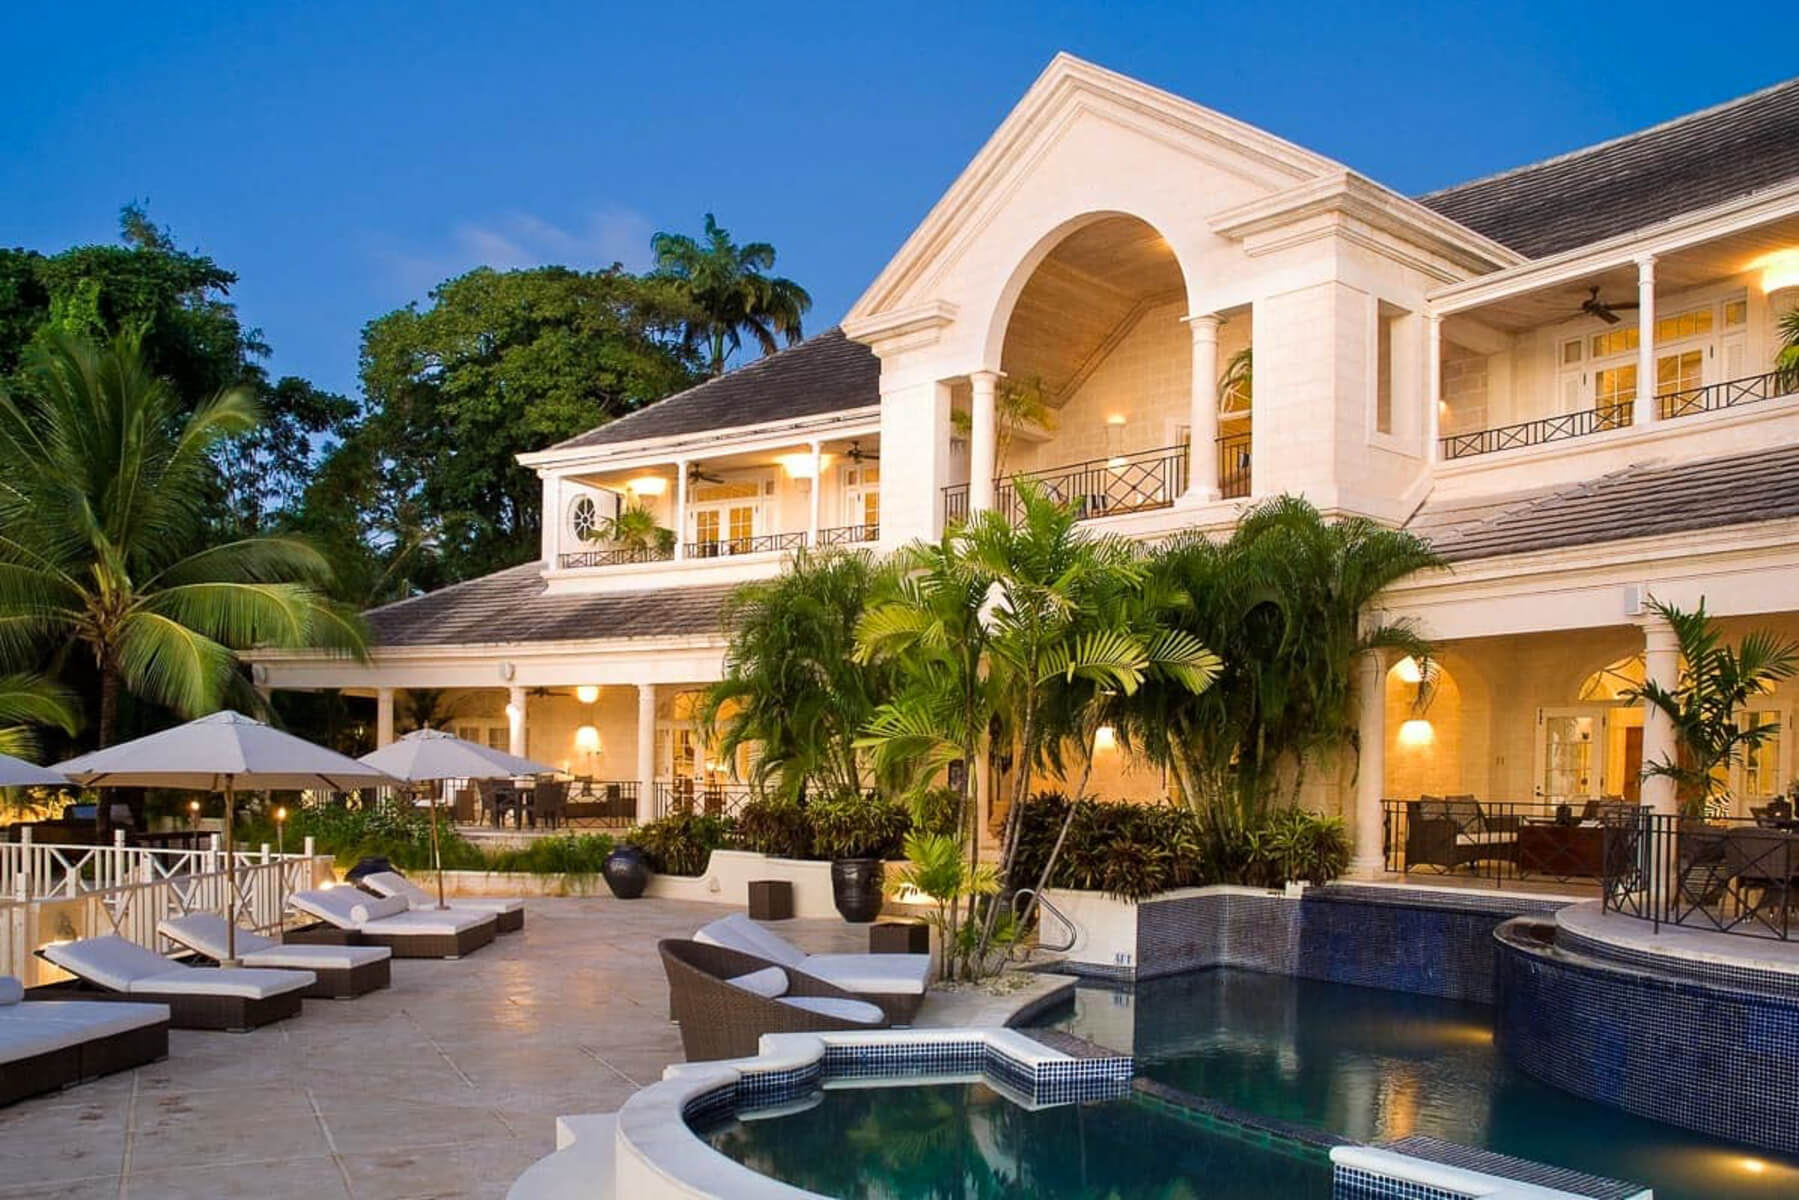 One Caribbean Estates - A boutique independent real estate brokerage